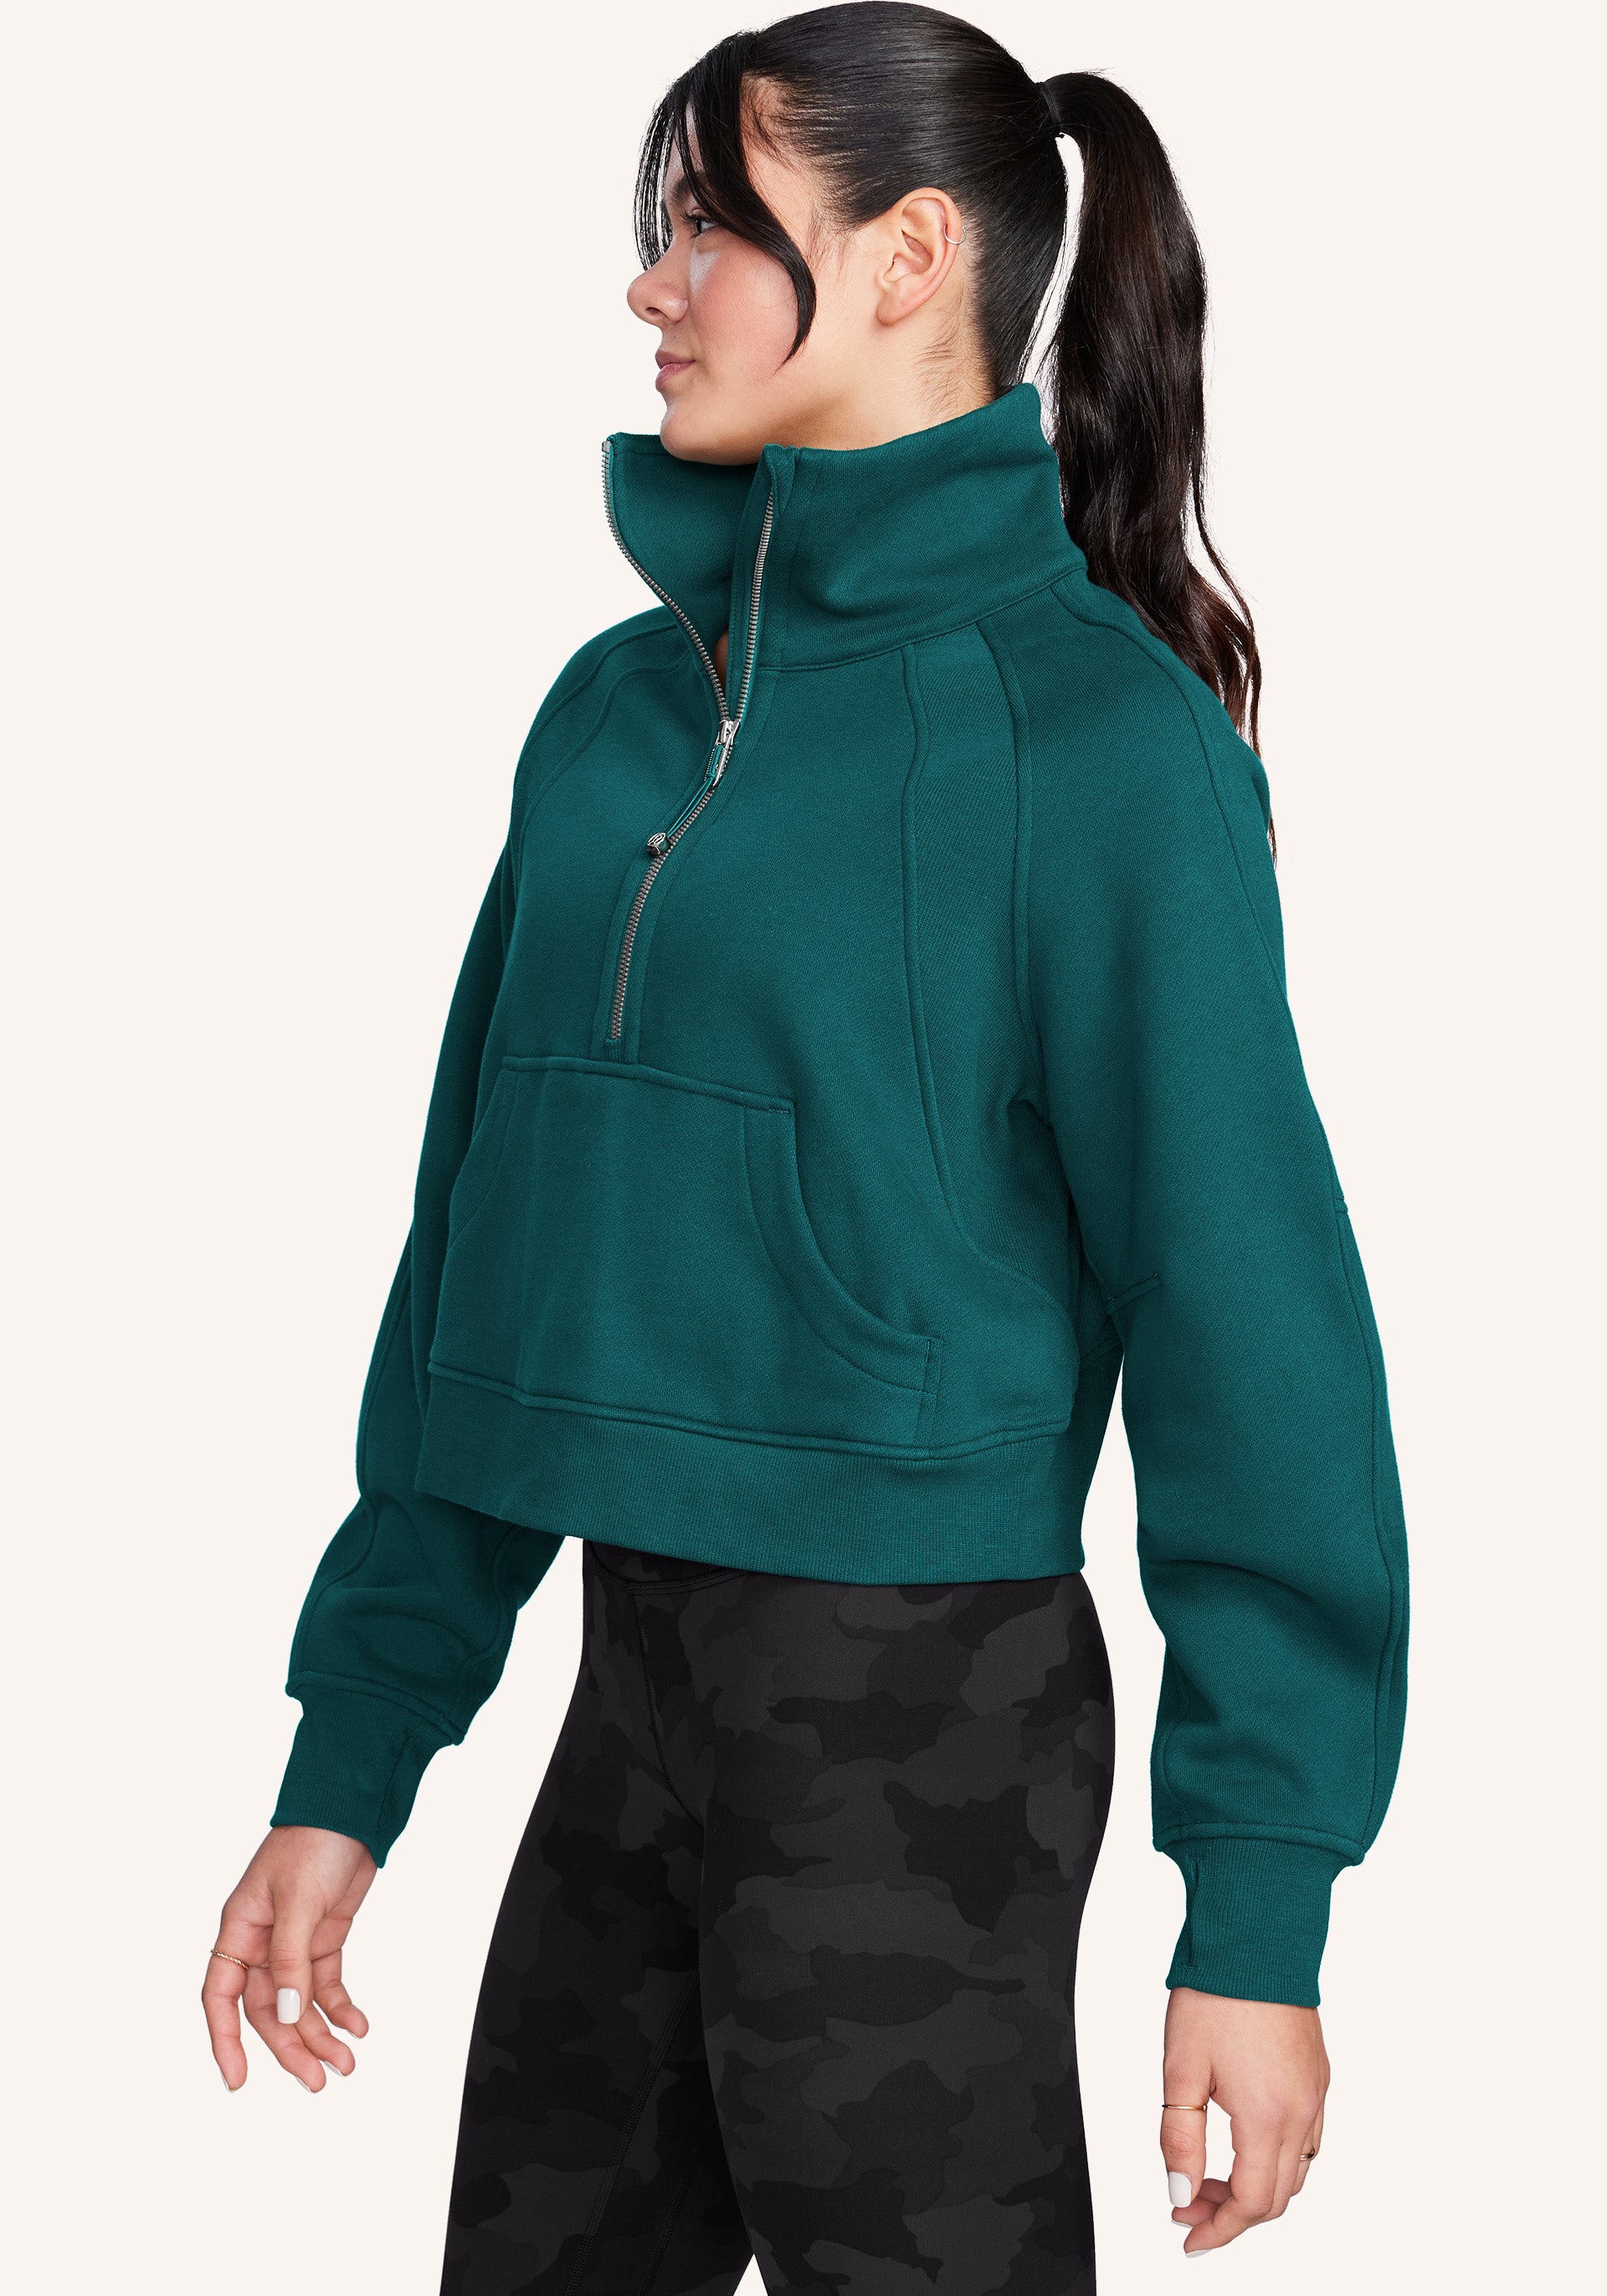 Oversized Scuba Half-Zip Hoodie Waist Length Jackets Sweatshirts